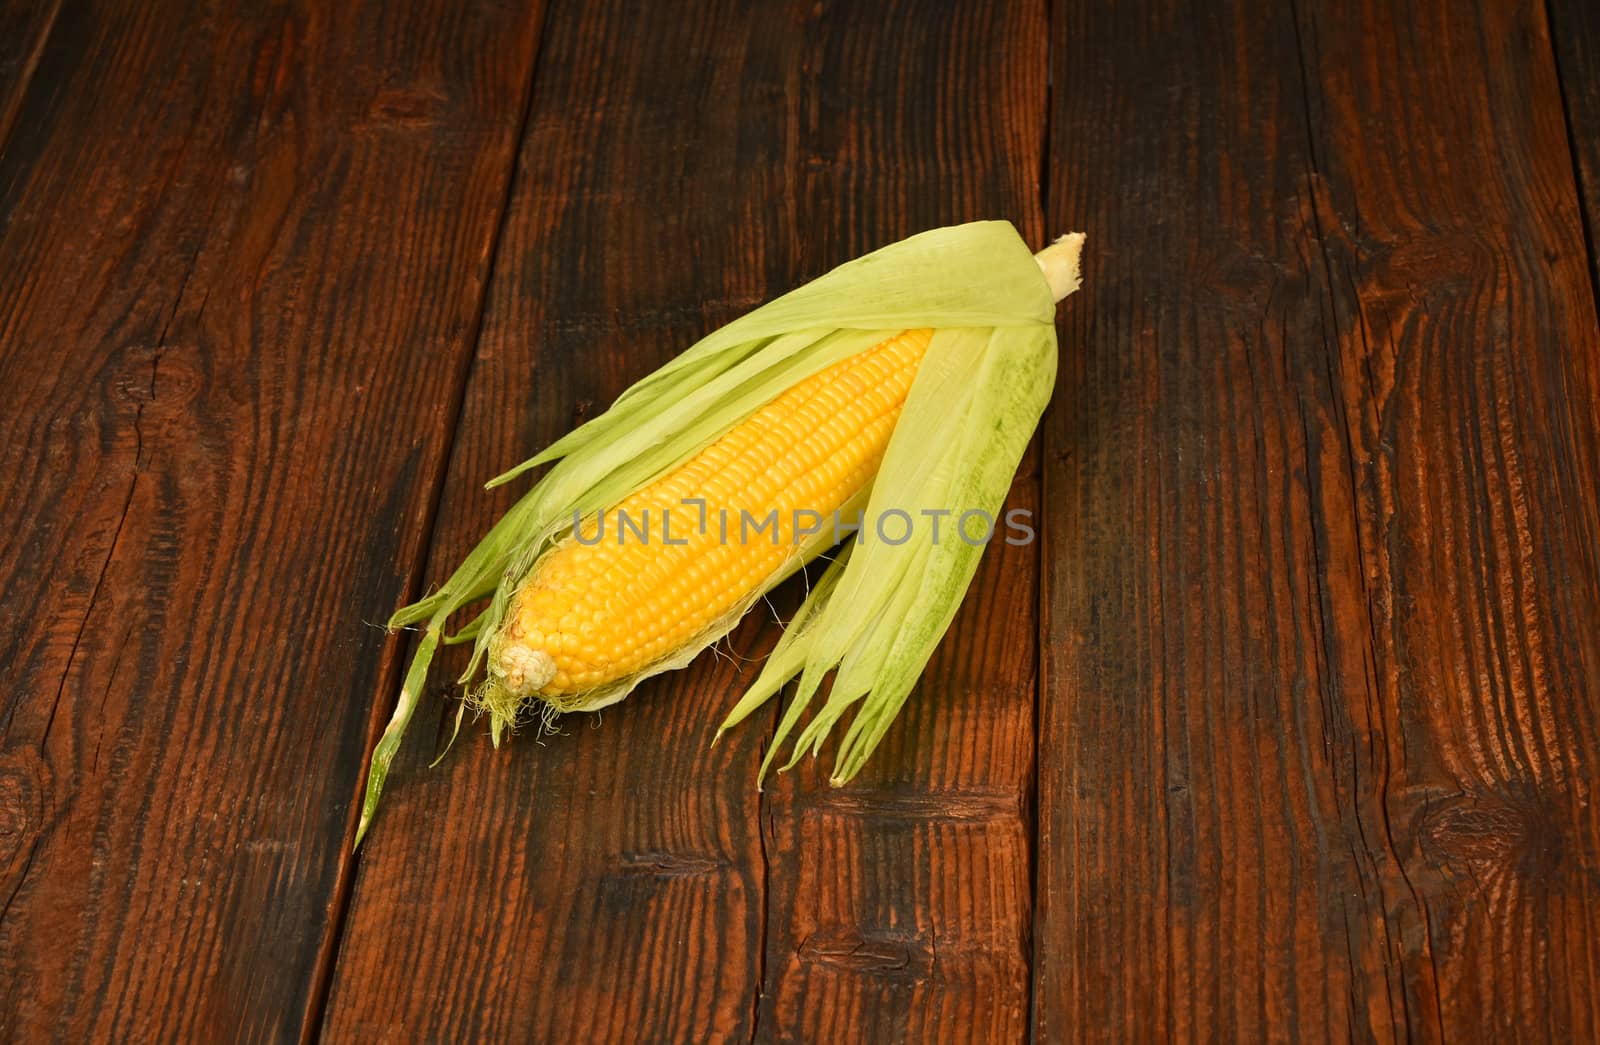 One open corn cob on vintage wooden surface by BreakingTheWalls